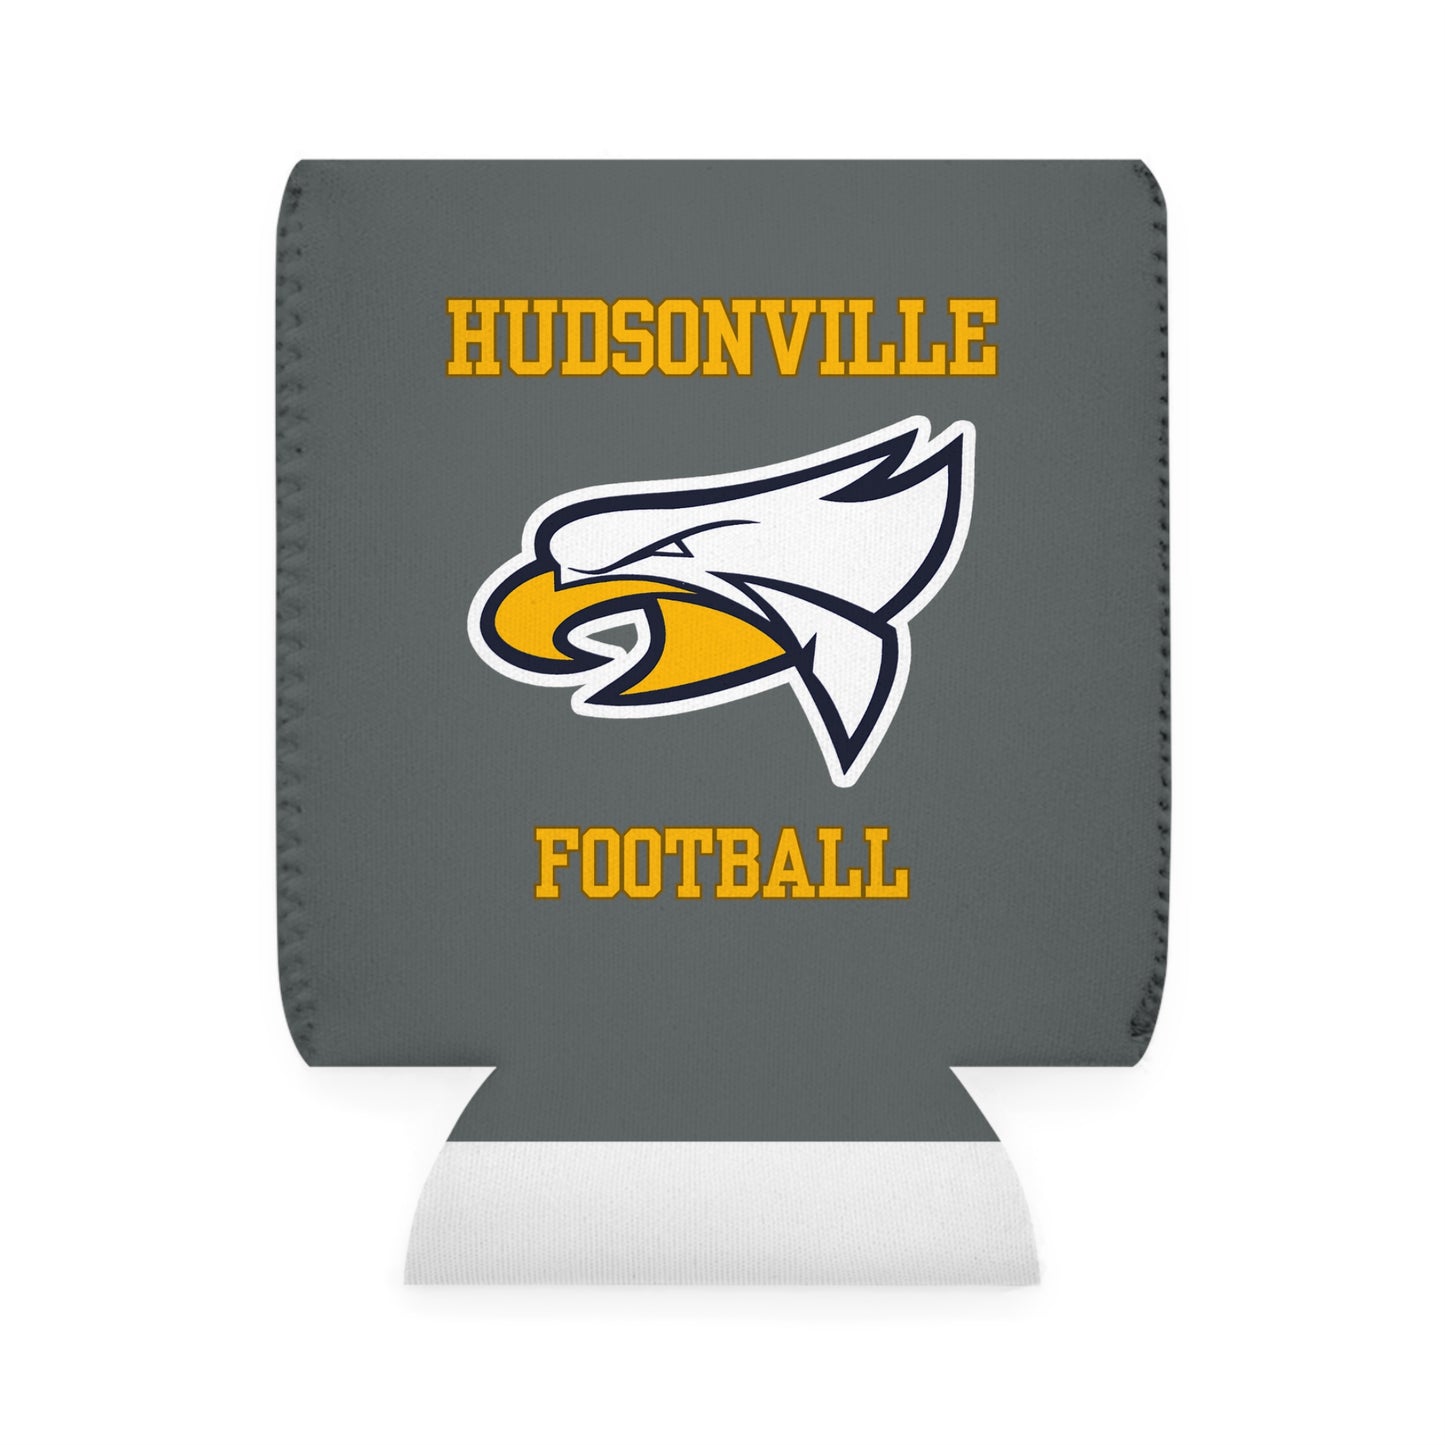 Hudsonville Football Gray Can Cooler Sleeve